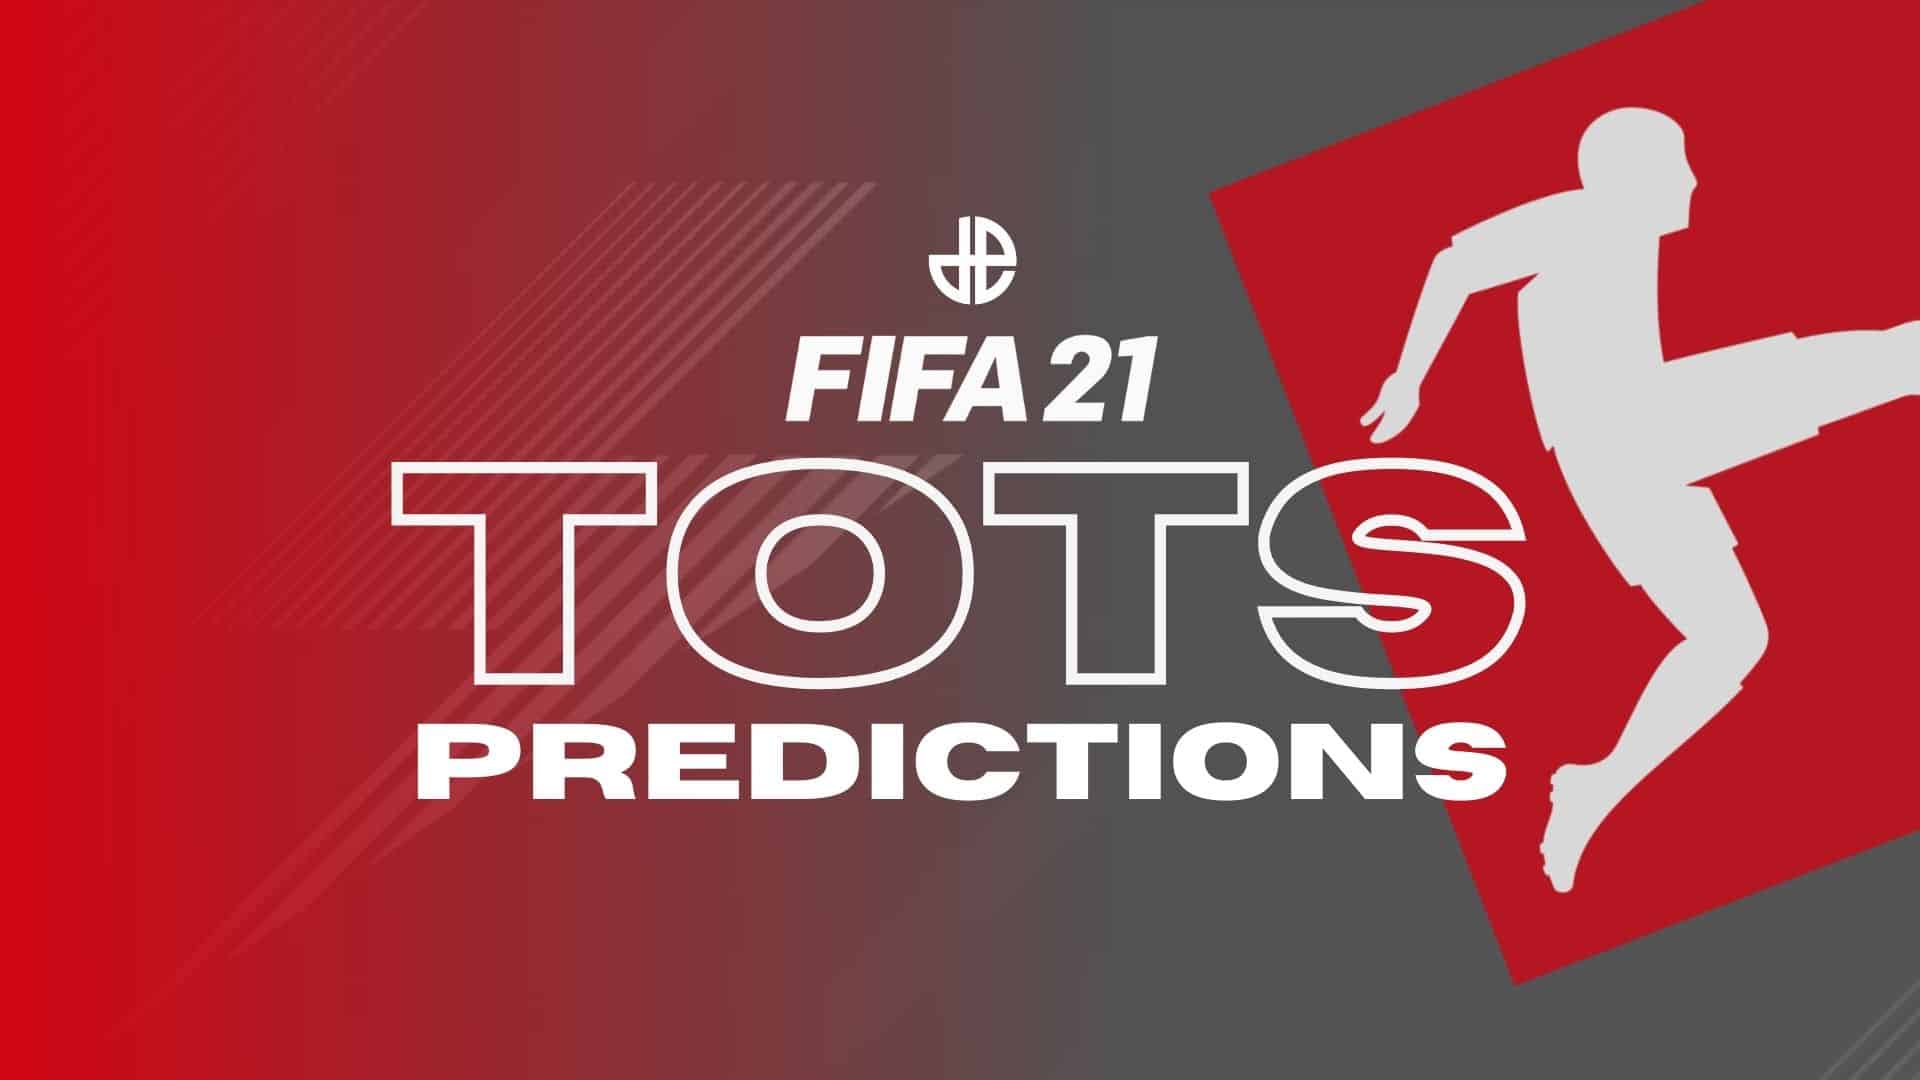 Bundesliga Team of the Season FIFA 21 TOTS predictions team revealed.